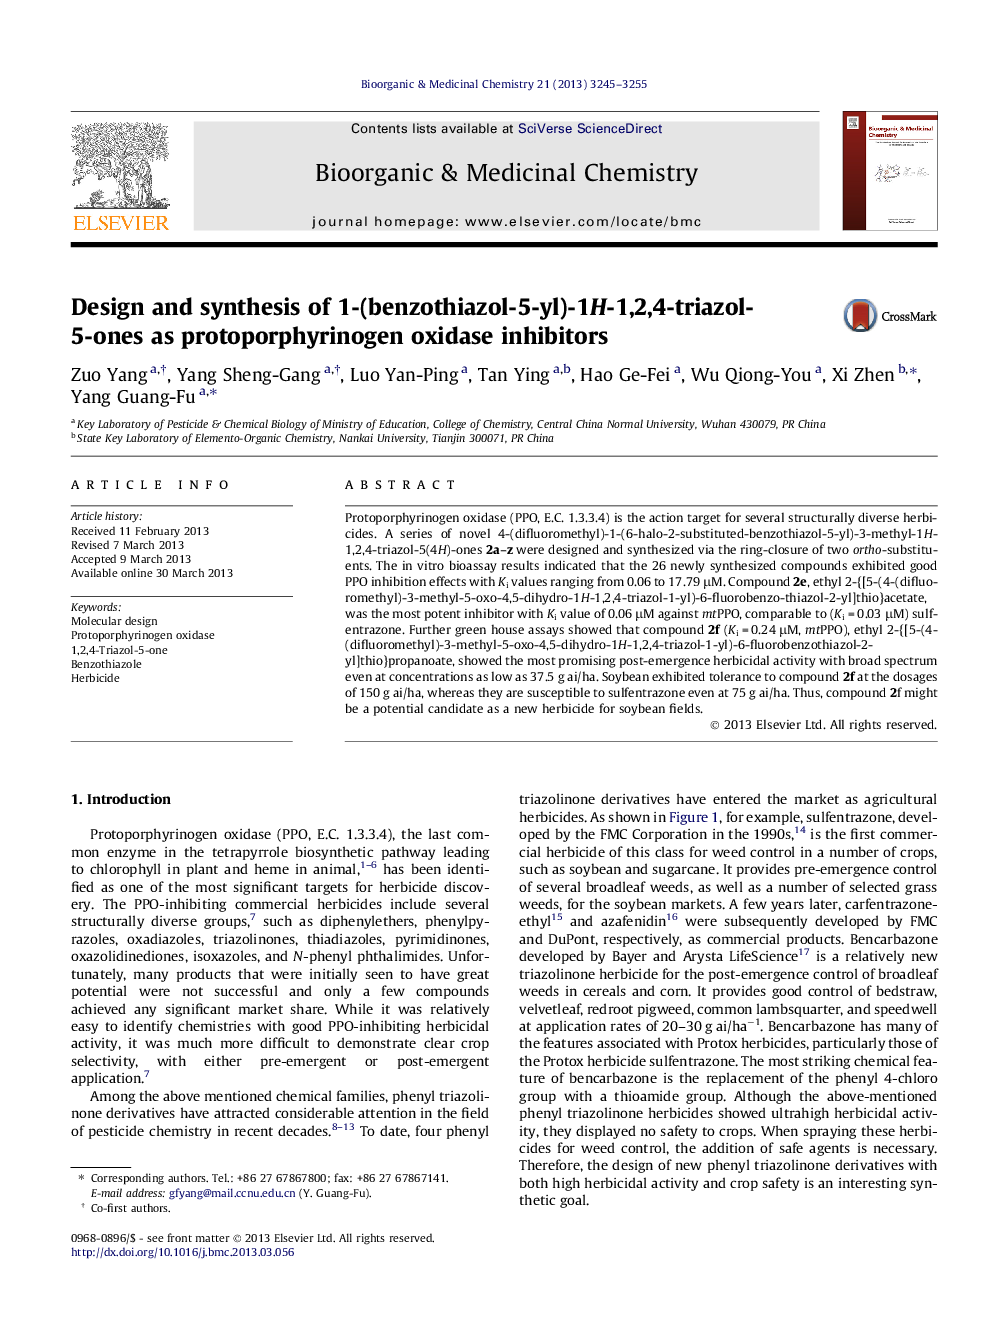 Design and synthesis of 1-(benzothiazol-5-yl)-1H-1,2,4-triazol-5-ones as protoporphyrinogen oxidase inhibitors